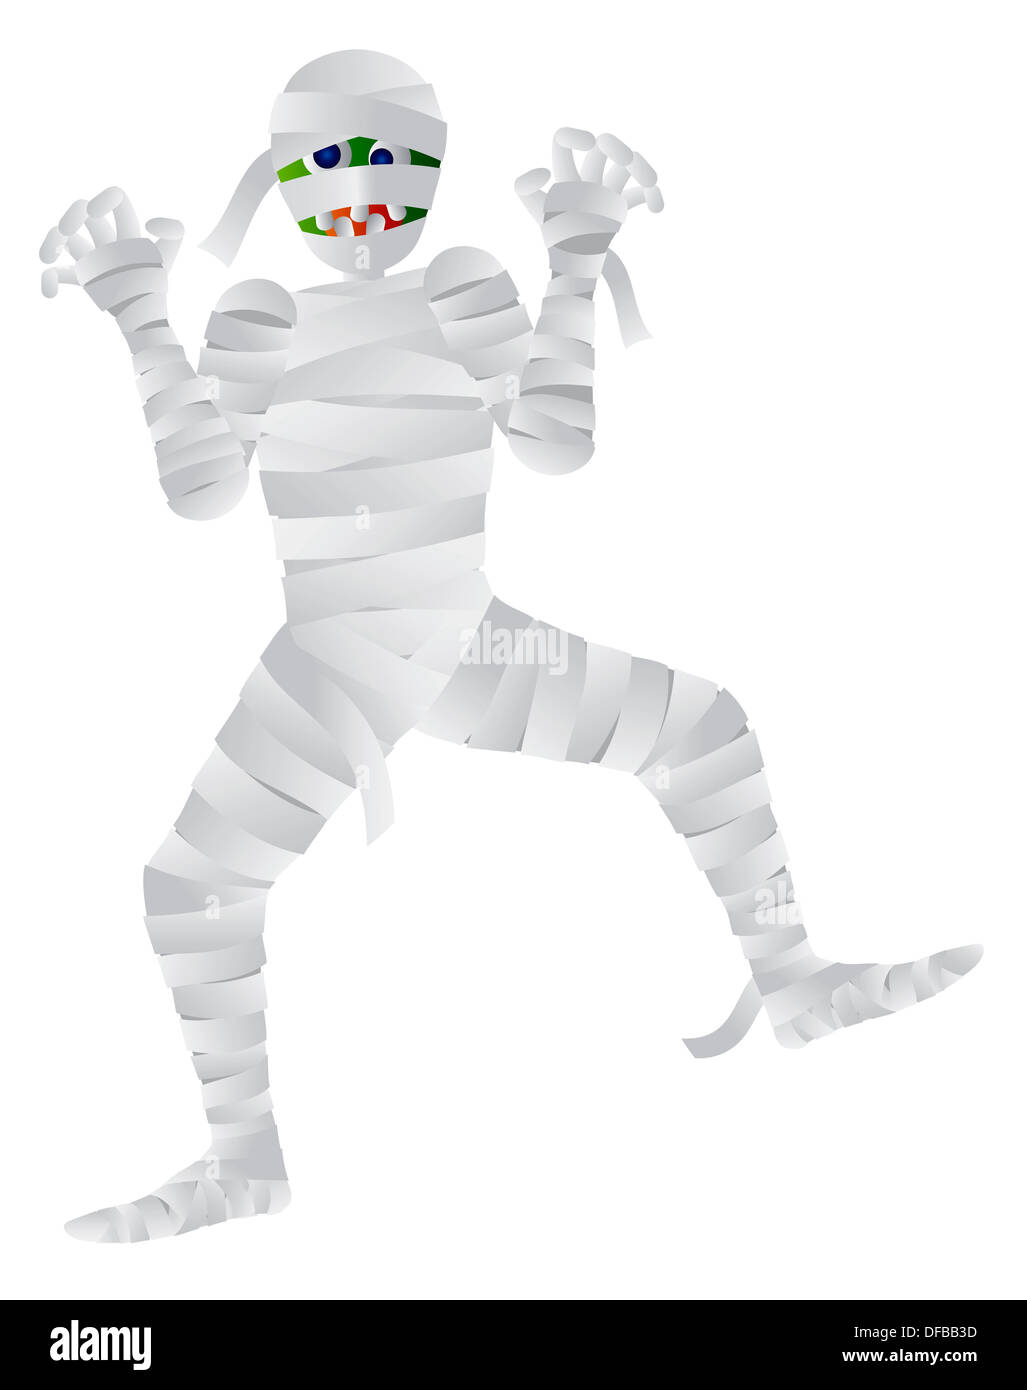 Halloween Mummy Cartoon Isolated on White Background Illustration Stock Photo